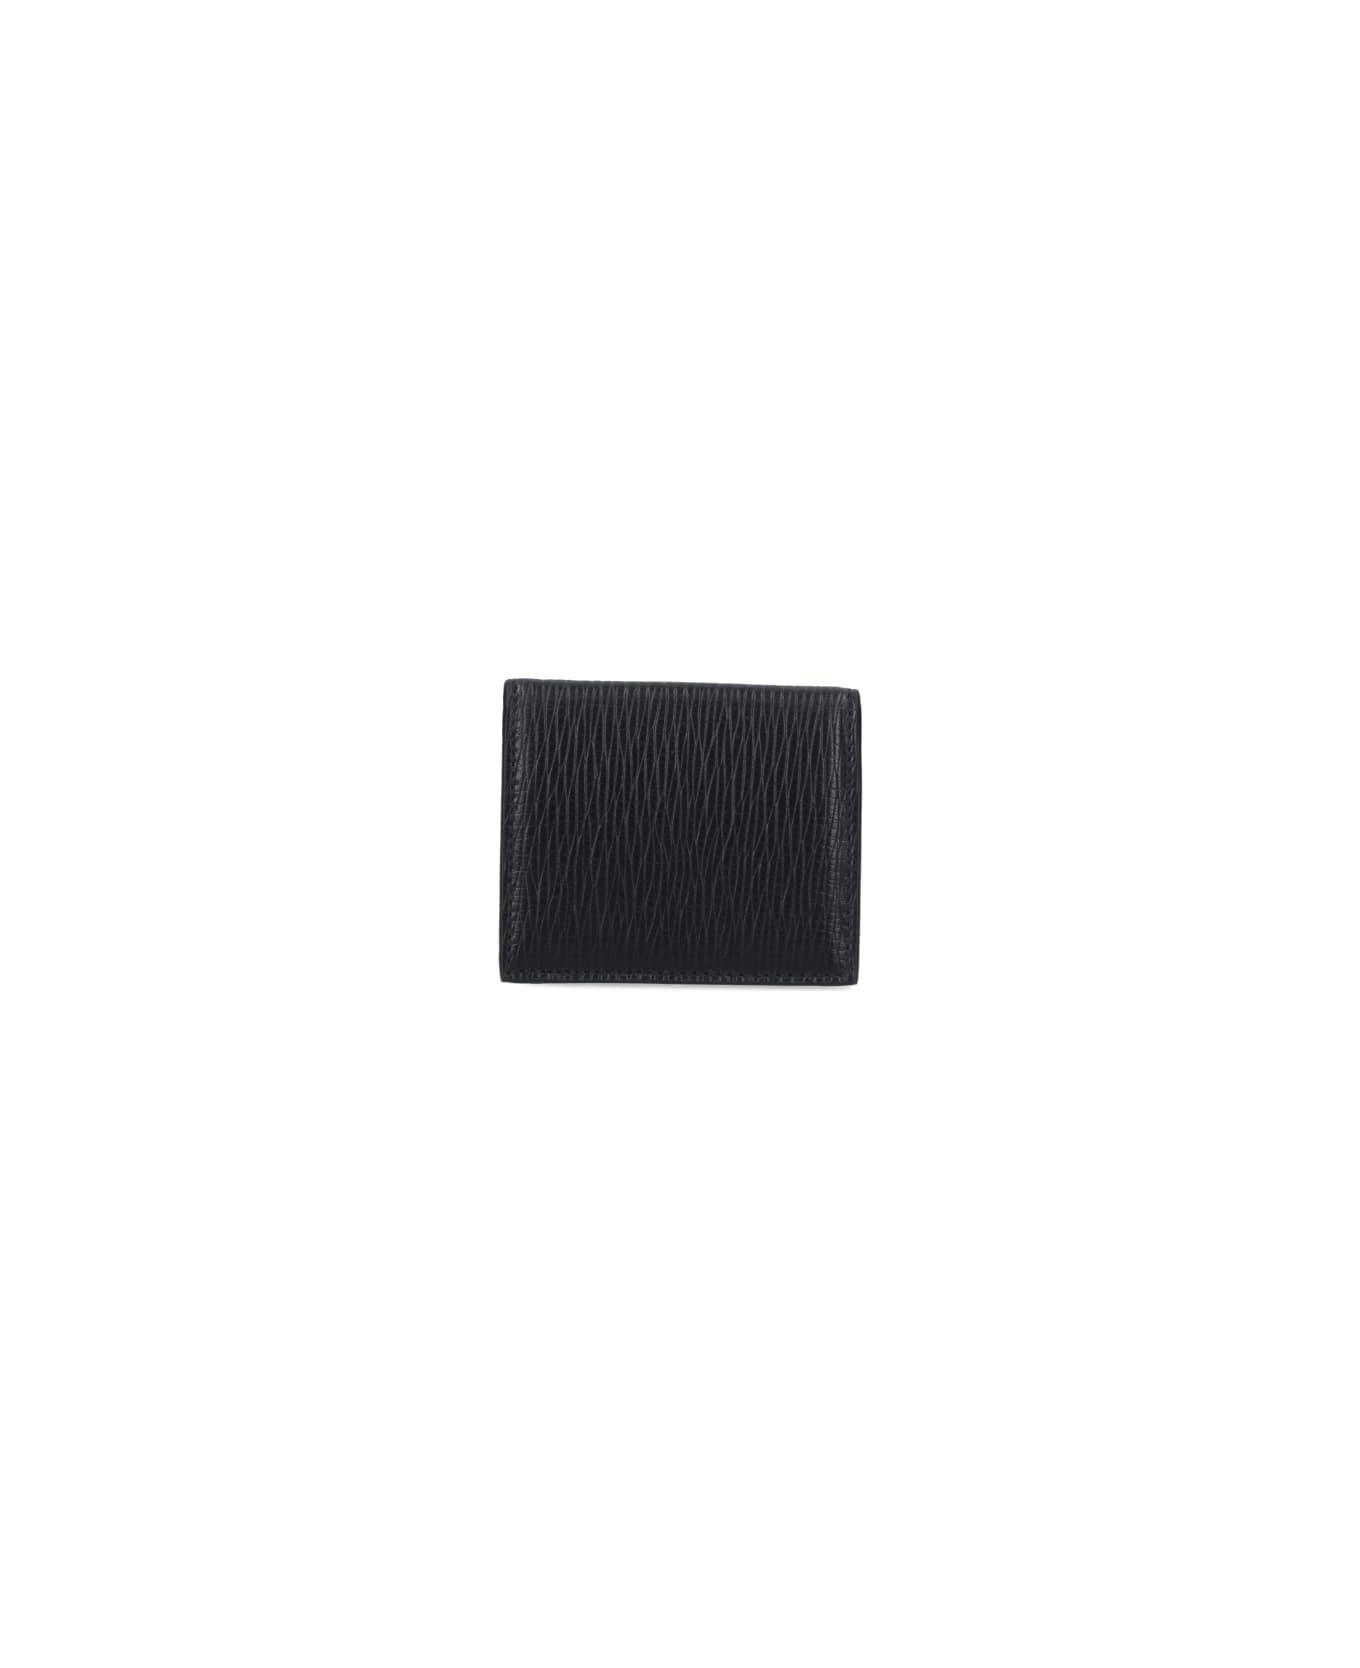 Ferragamo Logo Purse - Black   財布